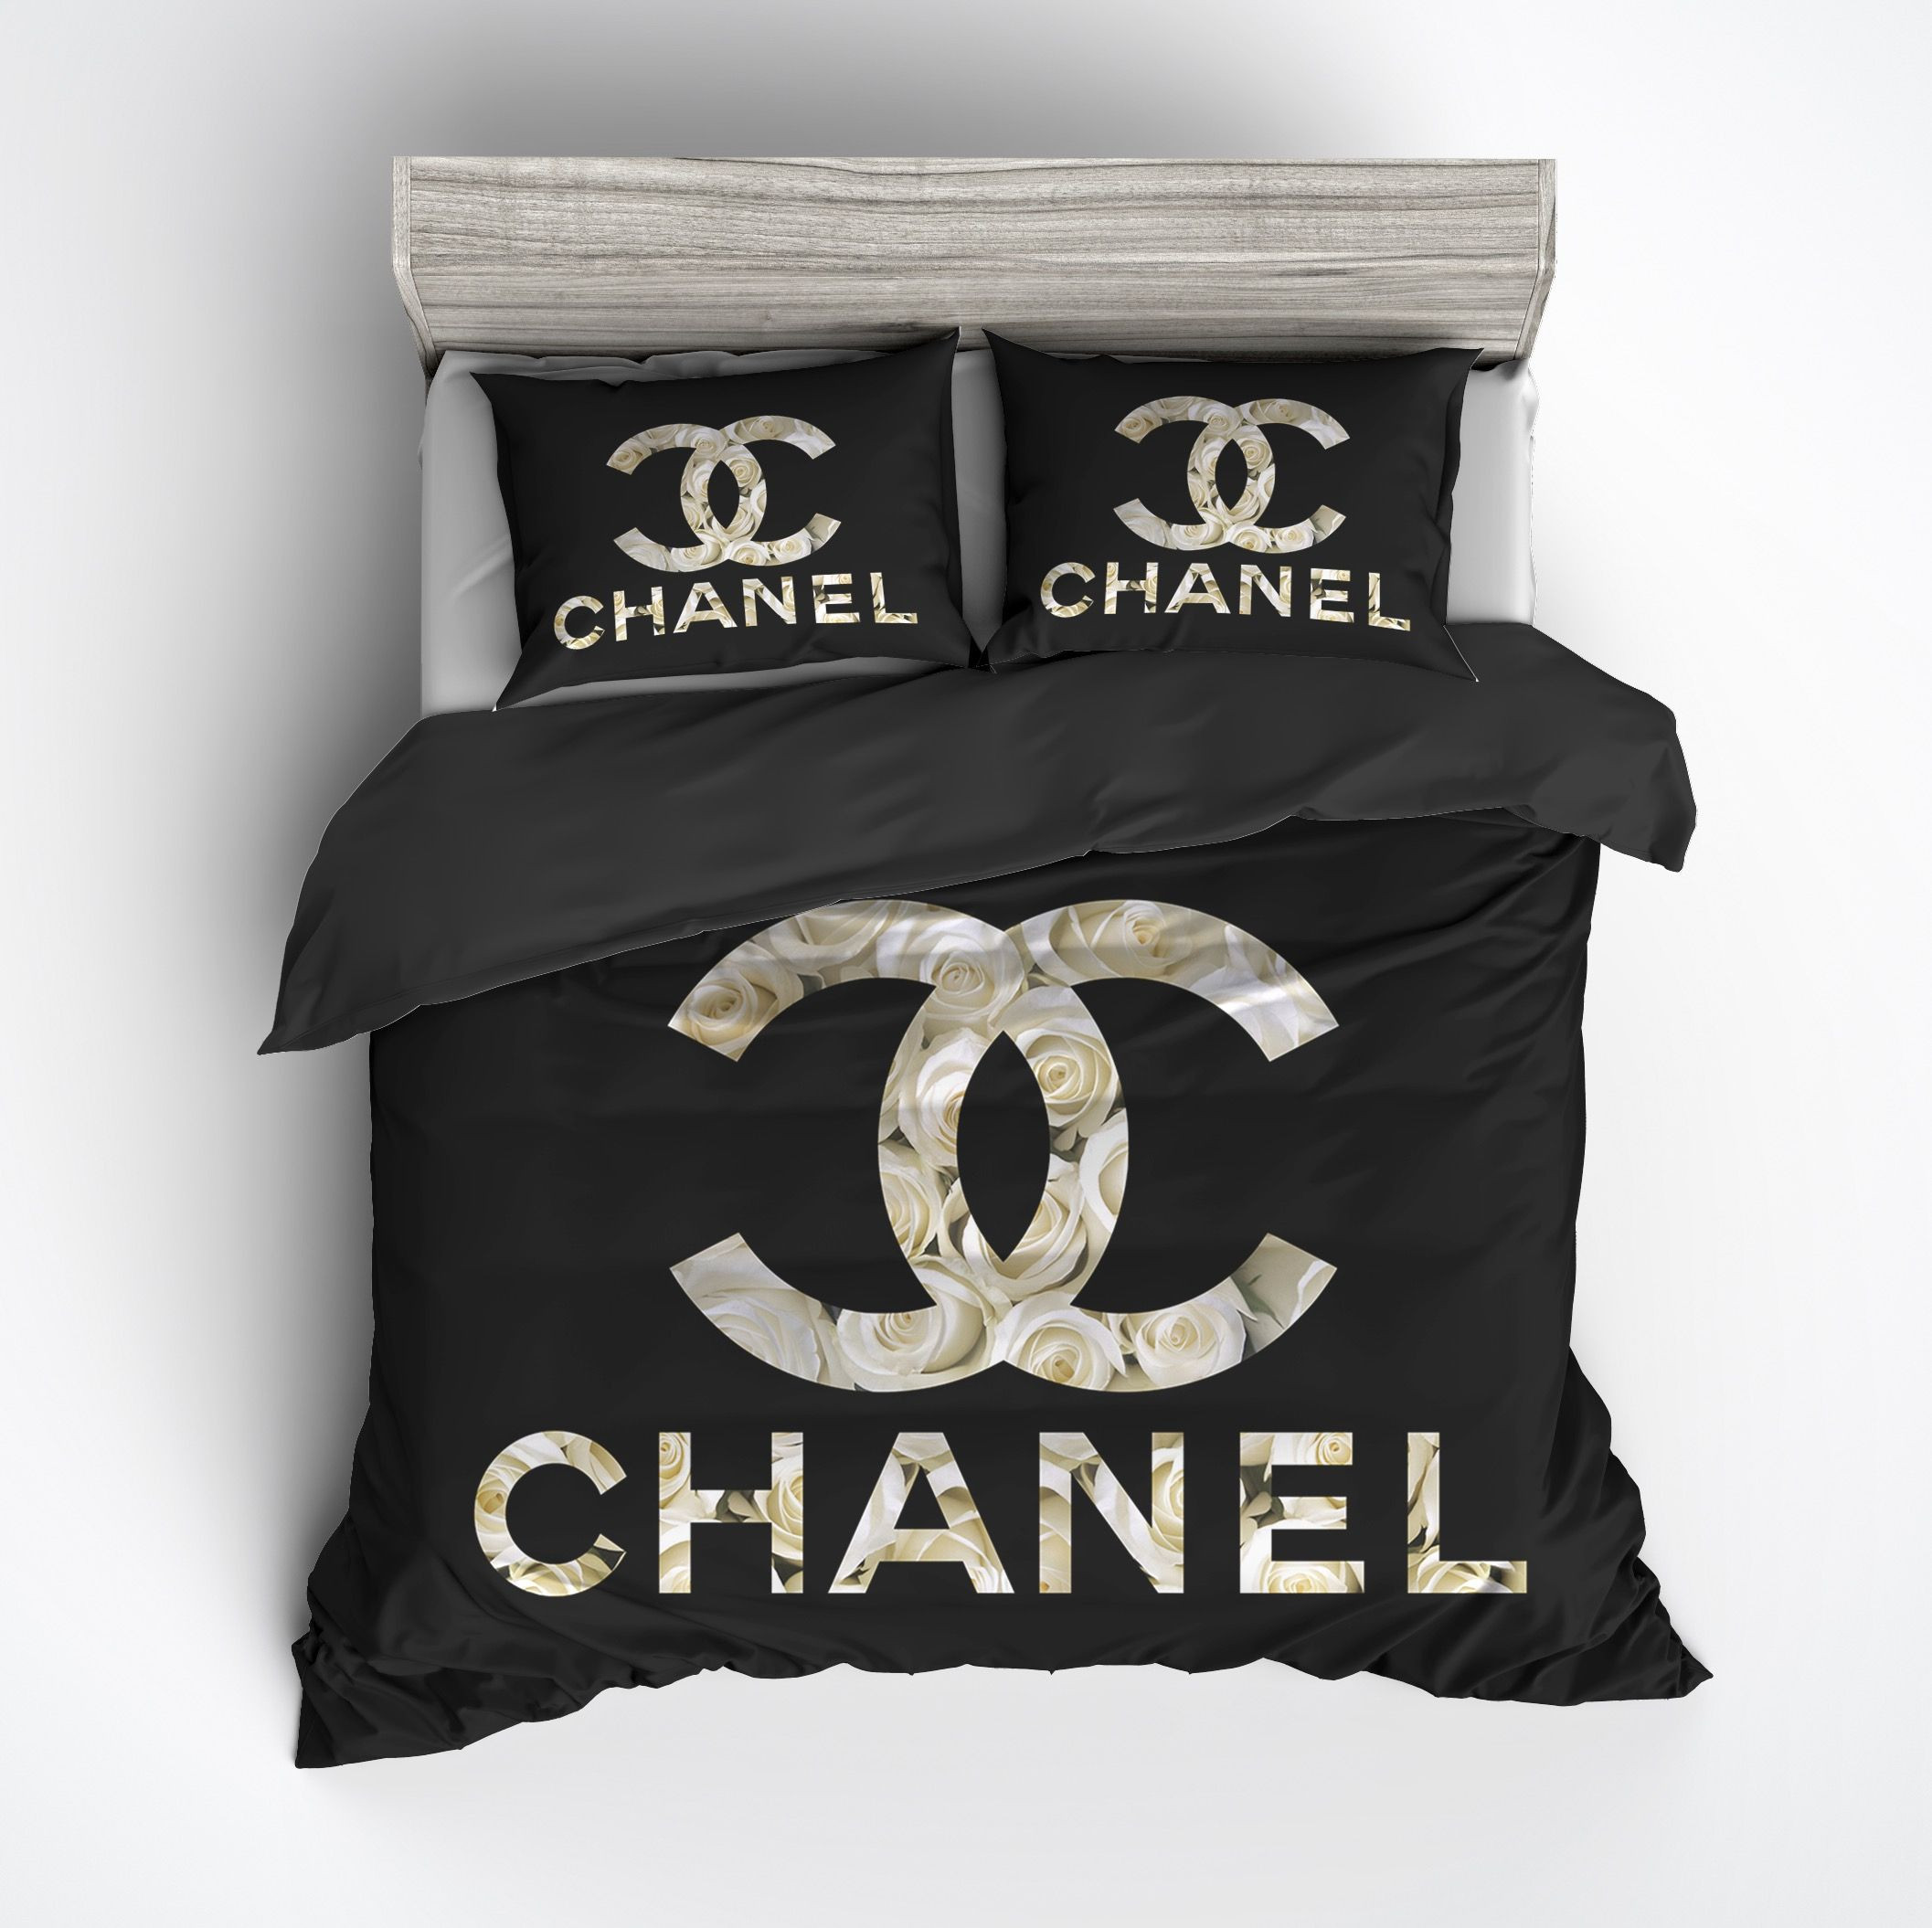 Chanel Luxury Bedding Sets Duvet Cover Bedroom Luxury Brand Bedding Bedroom